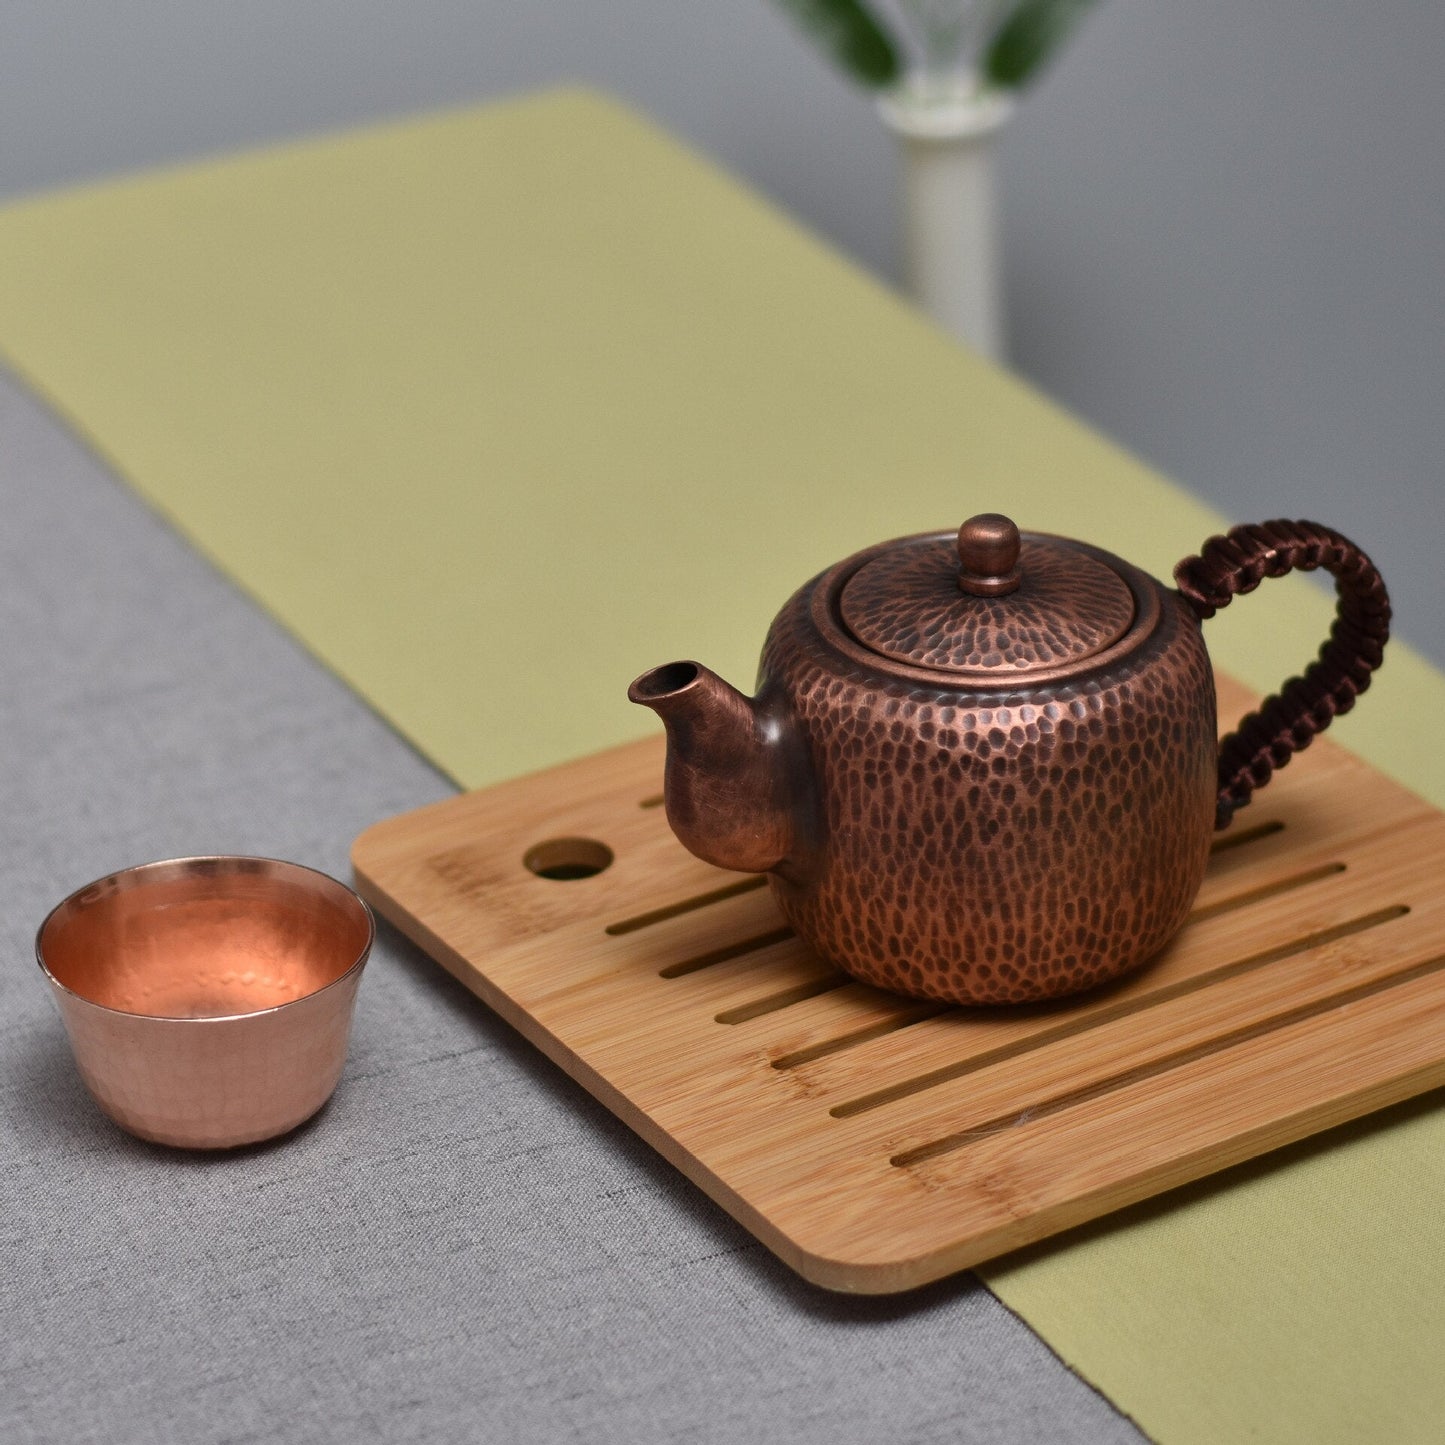 Té de té de cobre rojo puro hecho a mano Antiguo de cobre pequeño kung fu kung té té fabricante de té de té té